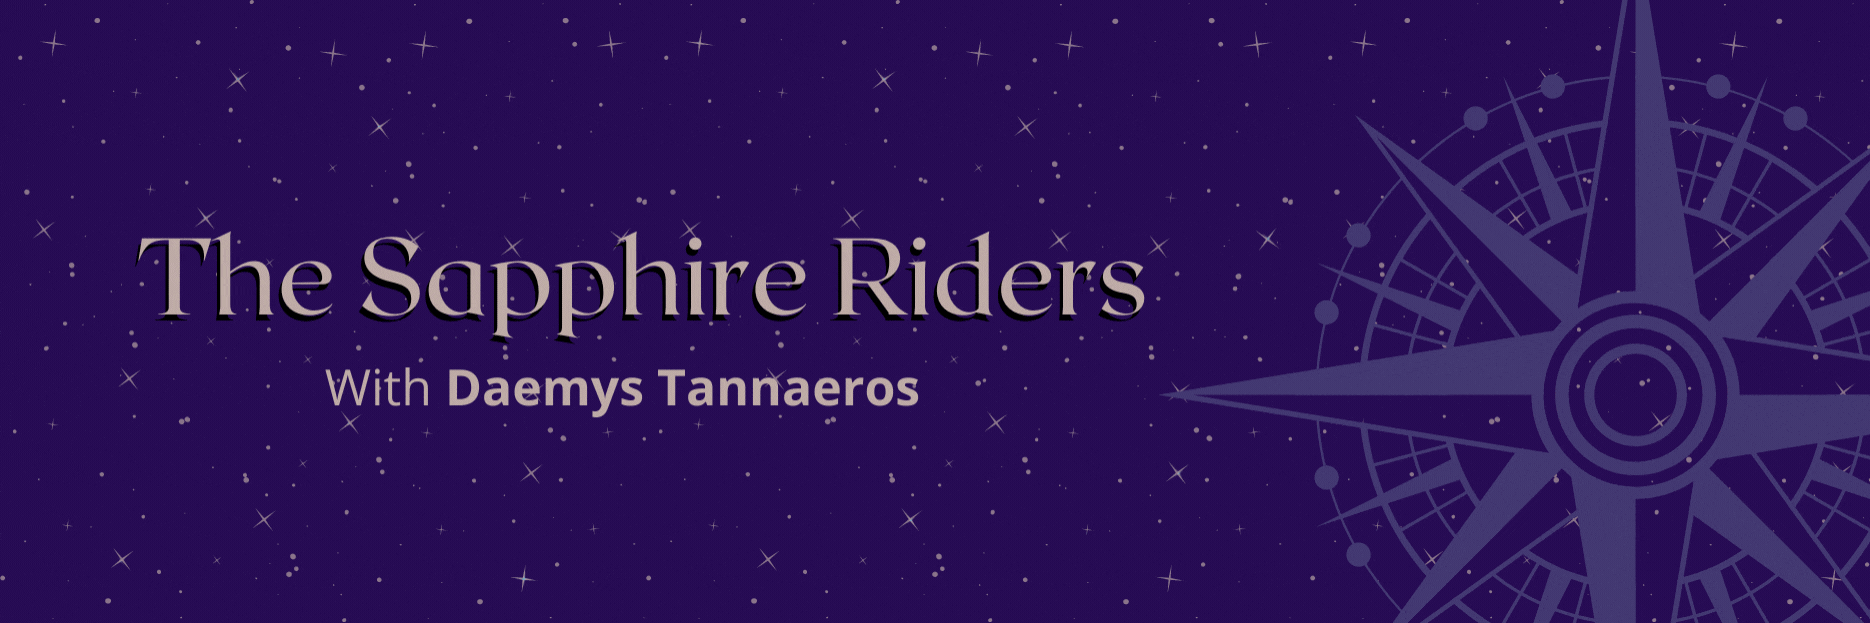 The Sapphire Riders #6